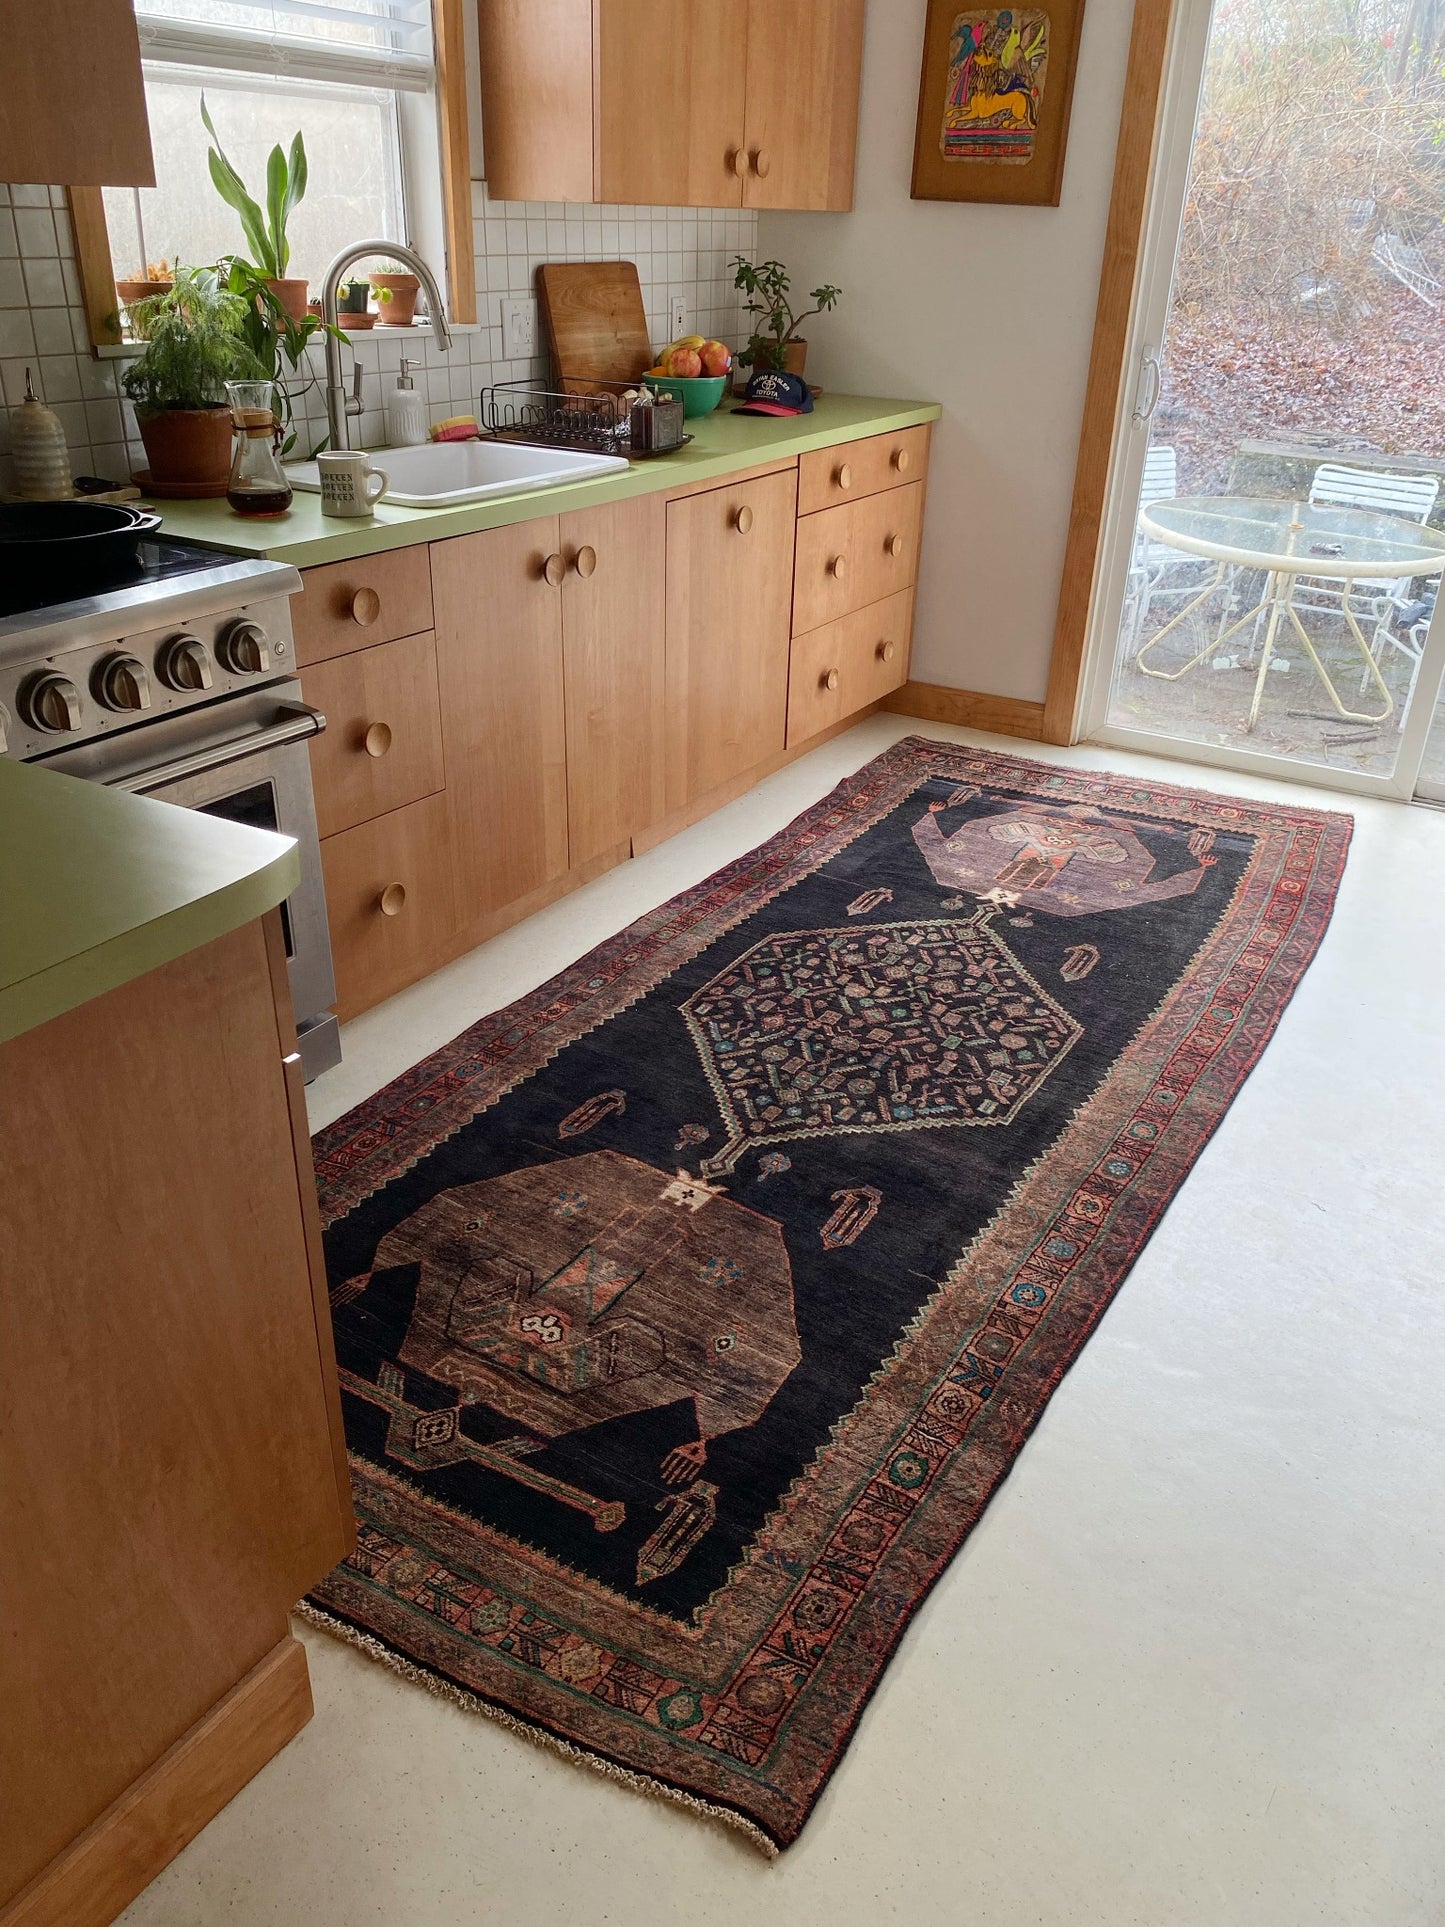 Palm vintage runner rug in a kitchen